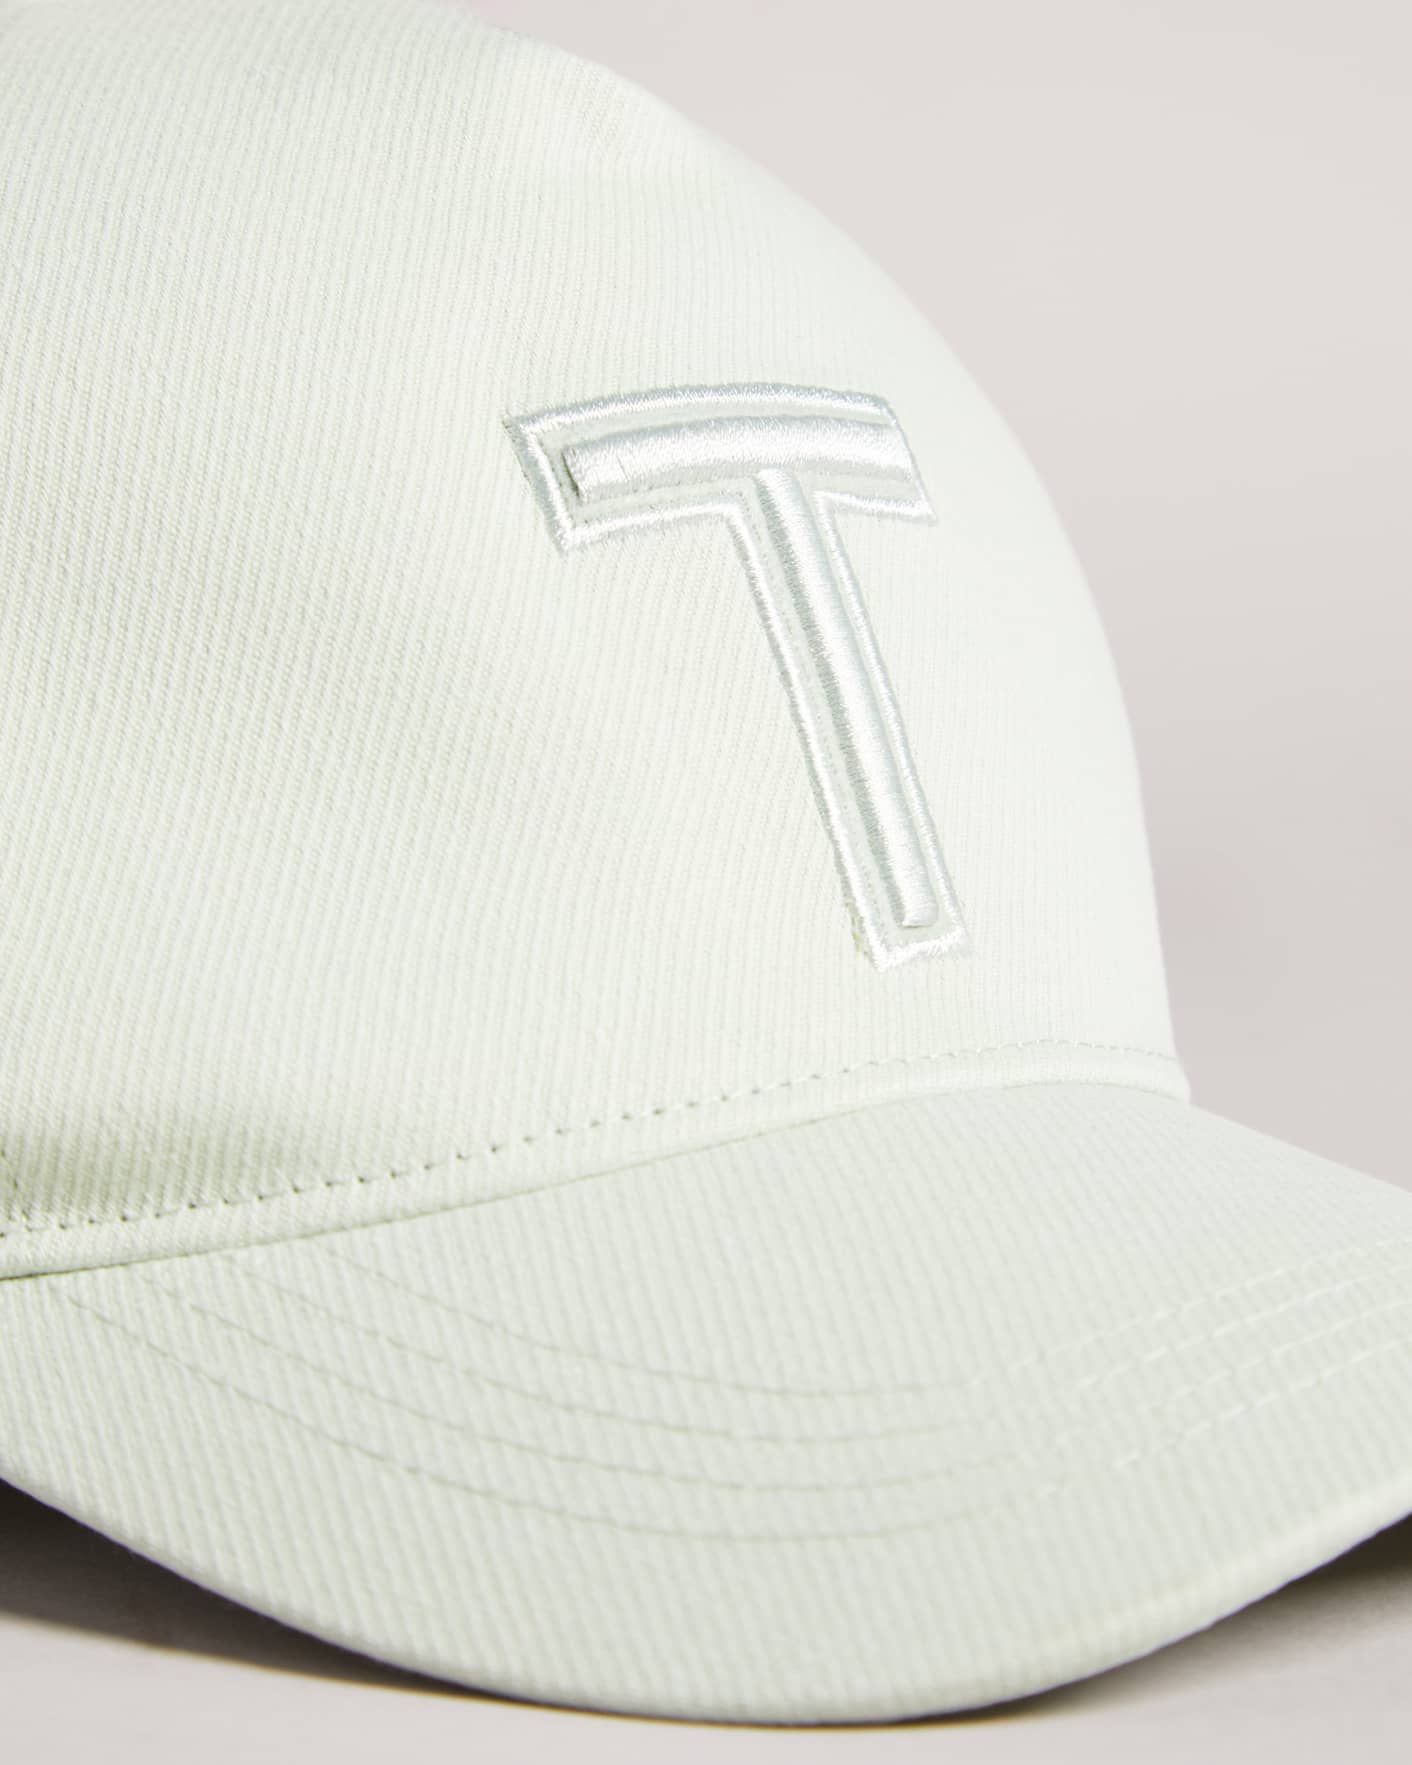 TRISTEN - LT-GREEN | Hats & Caps | Ted Baker ROW